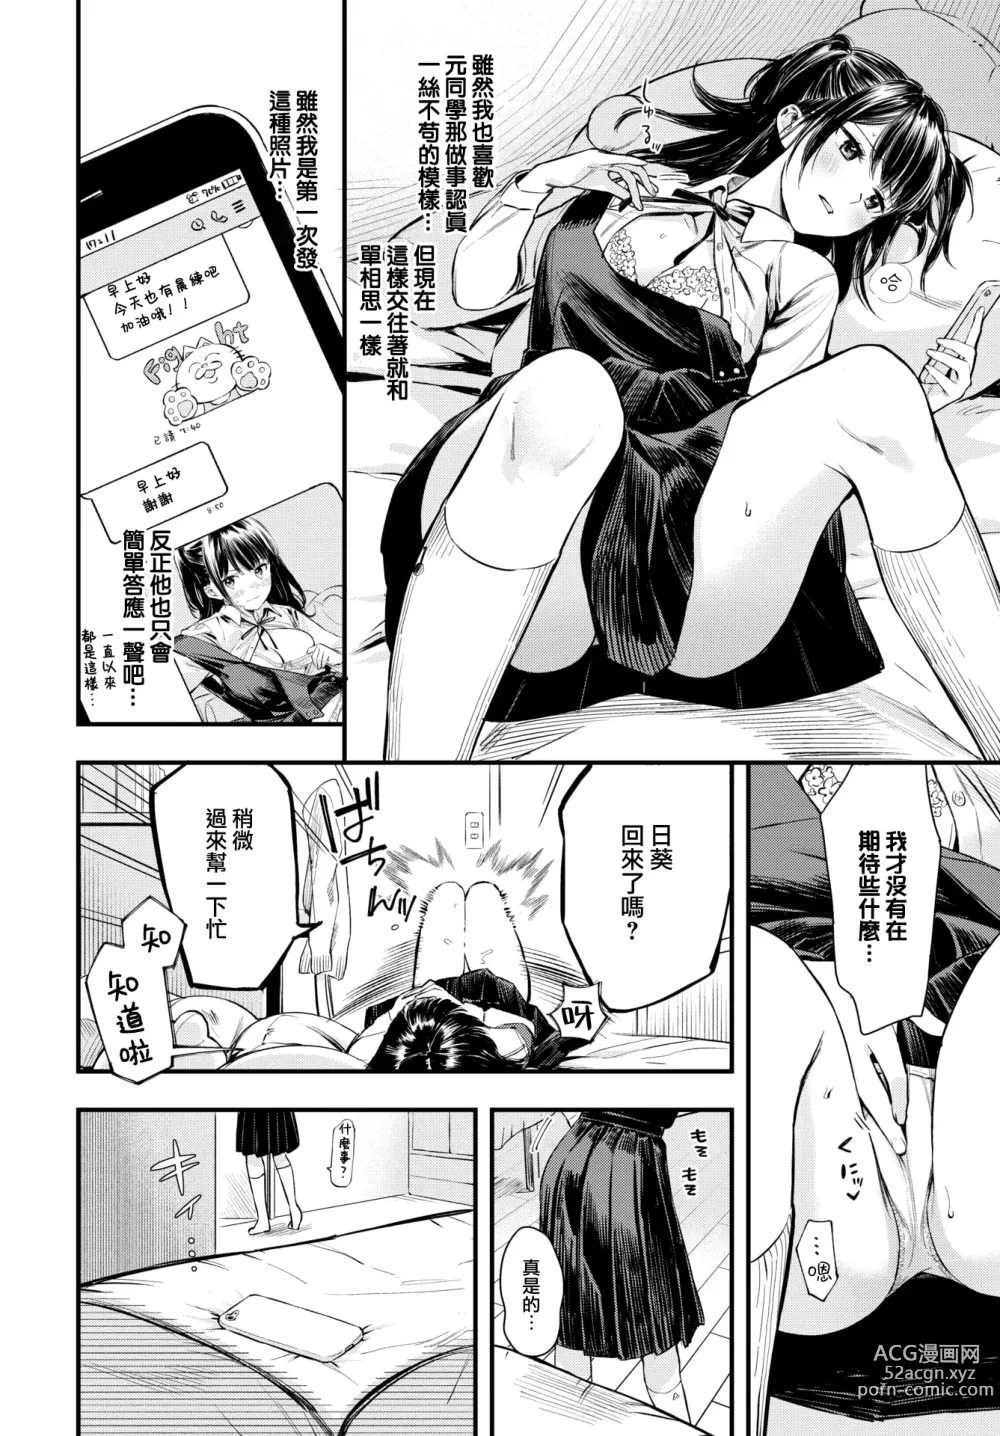 Page 3 of manga Sonome de Utsushite